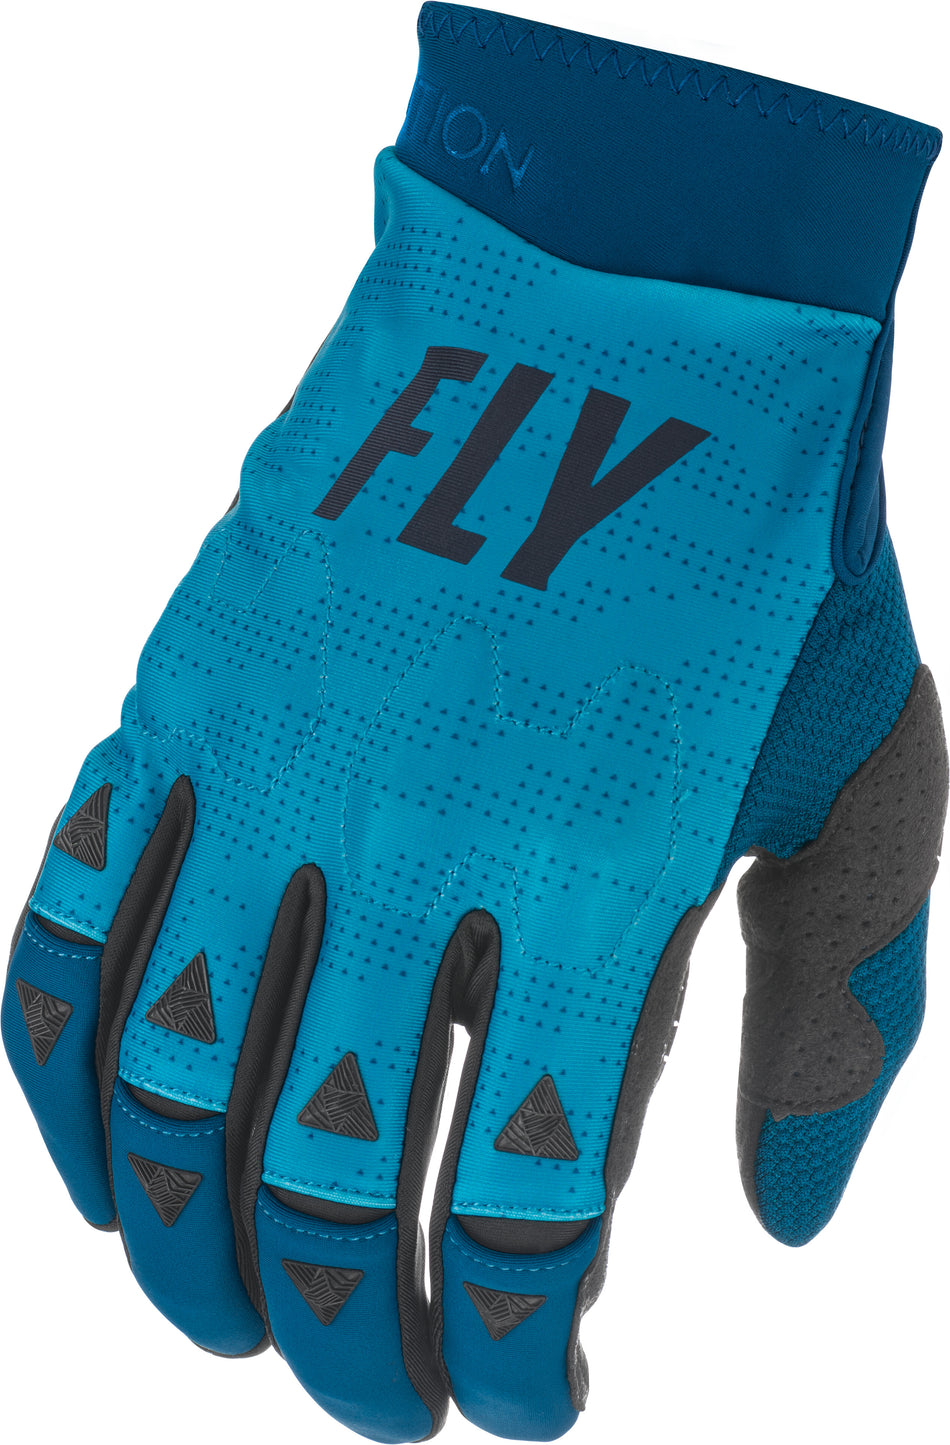 FLY RACING Evolution Dst Gloves Blue/Navy Sz 11 374-11111